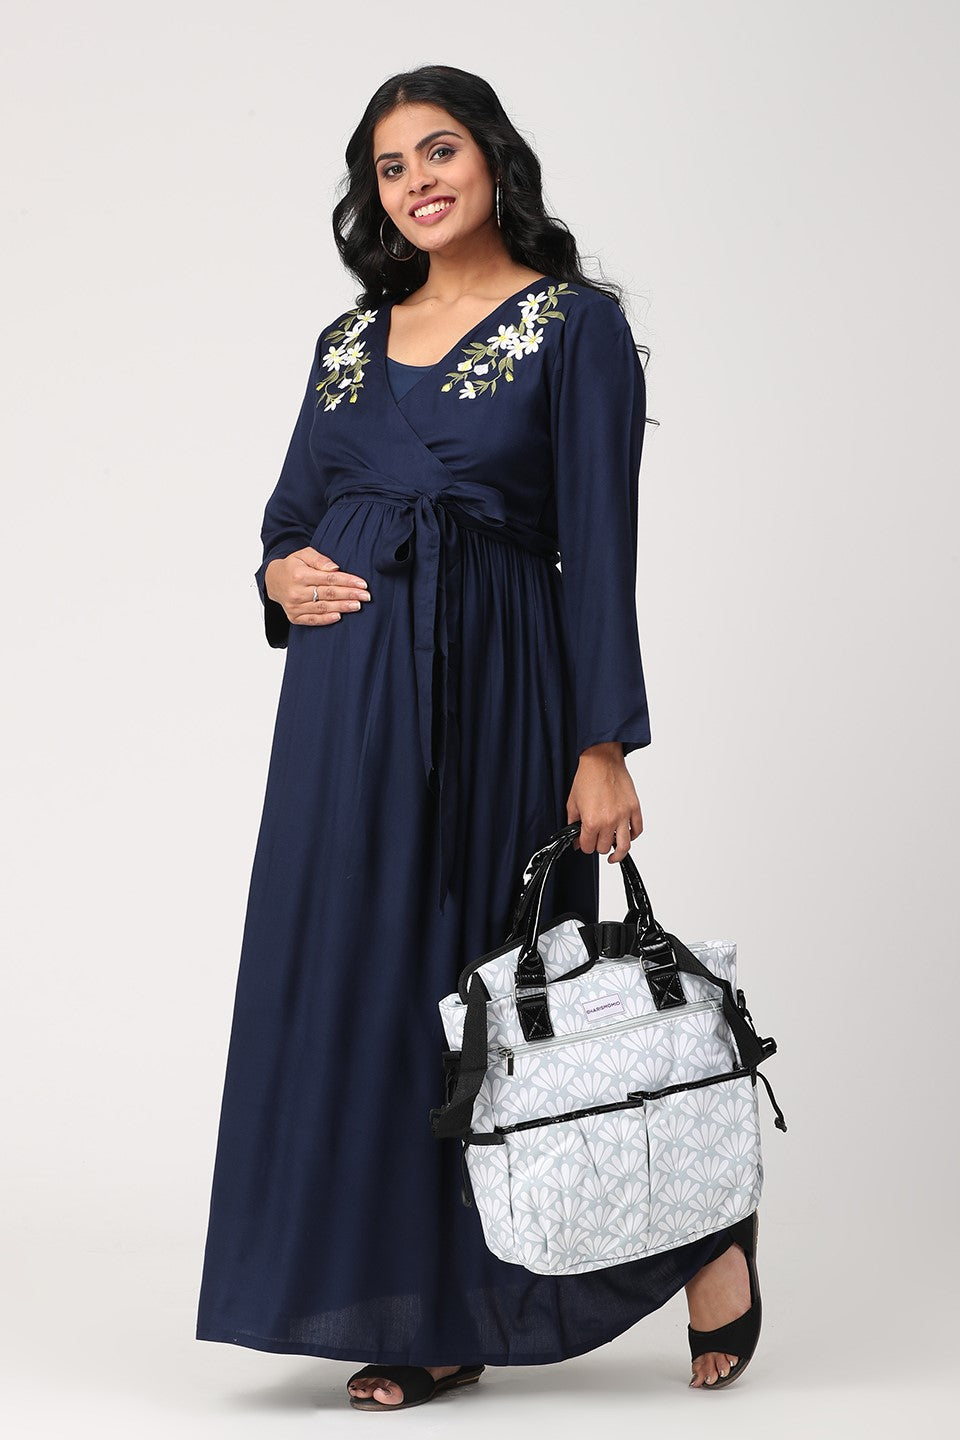 Luxe Royal Maternity/Nursing Wrap Dress- Blue